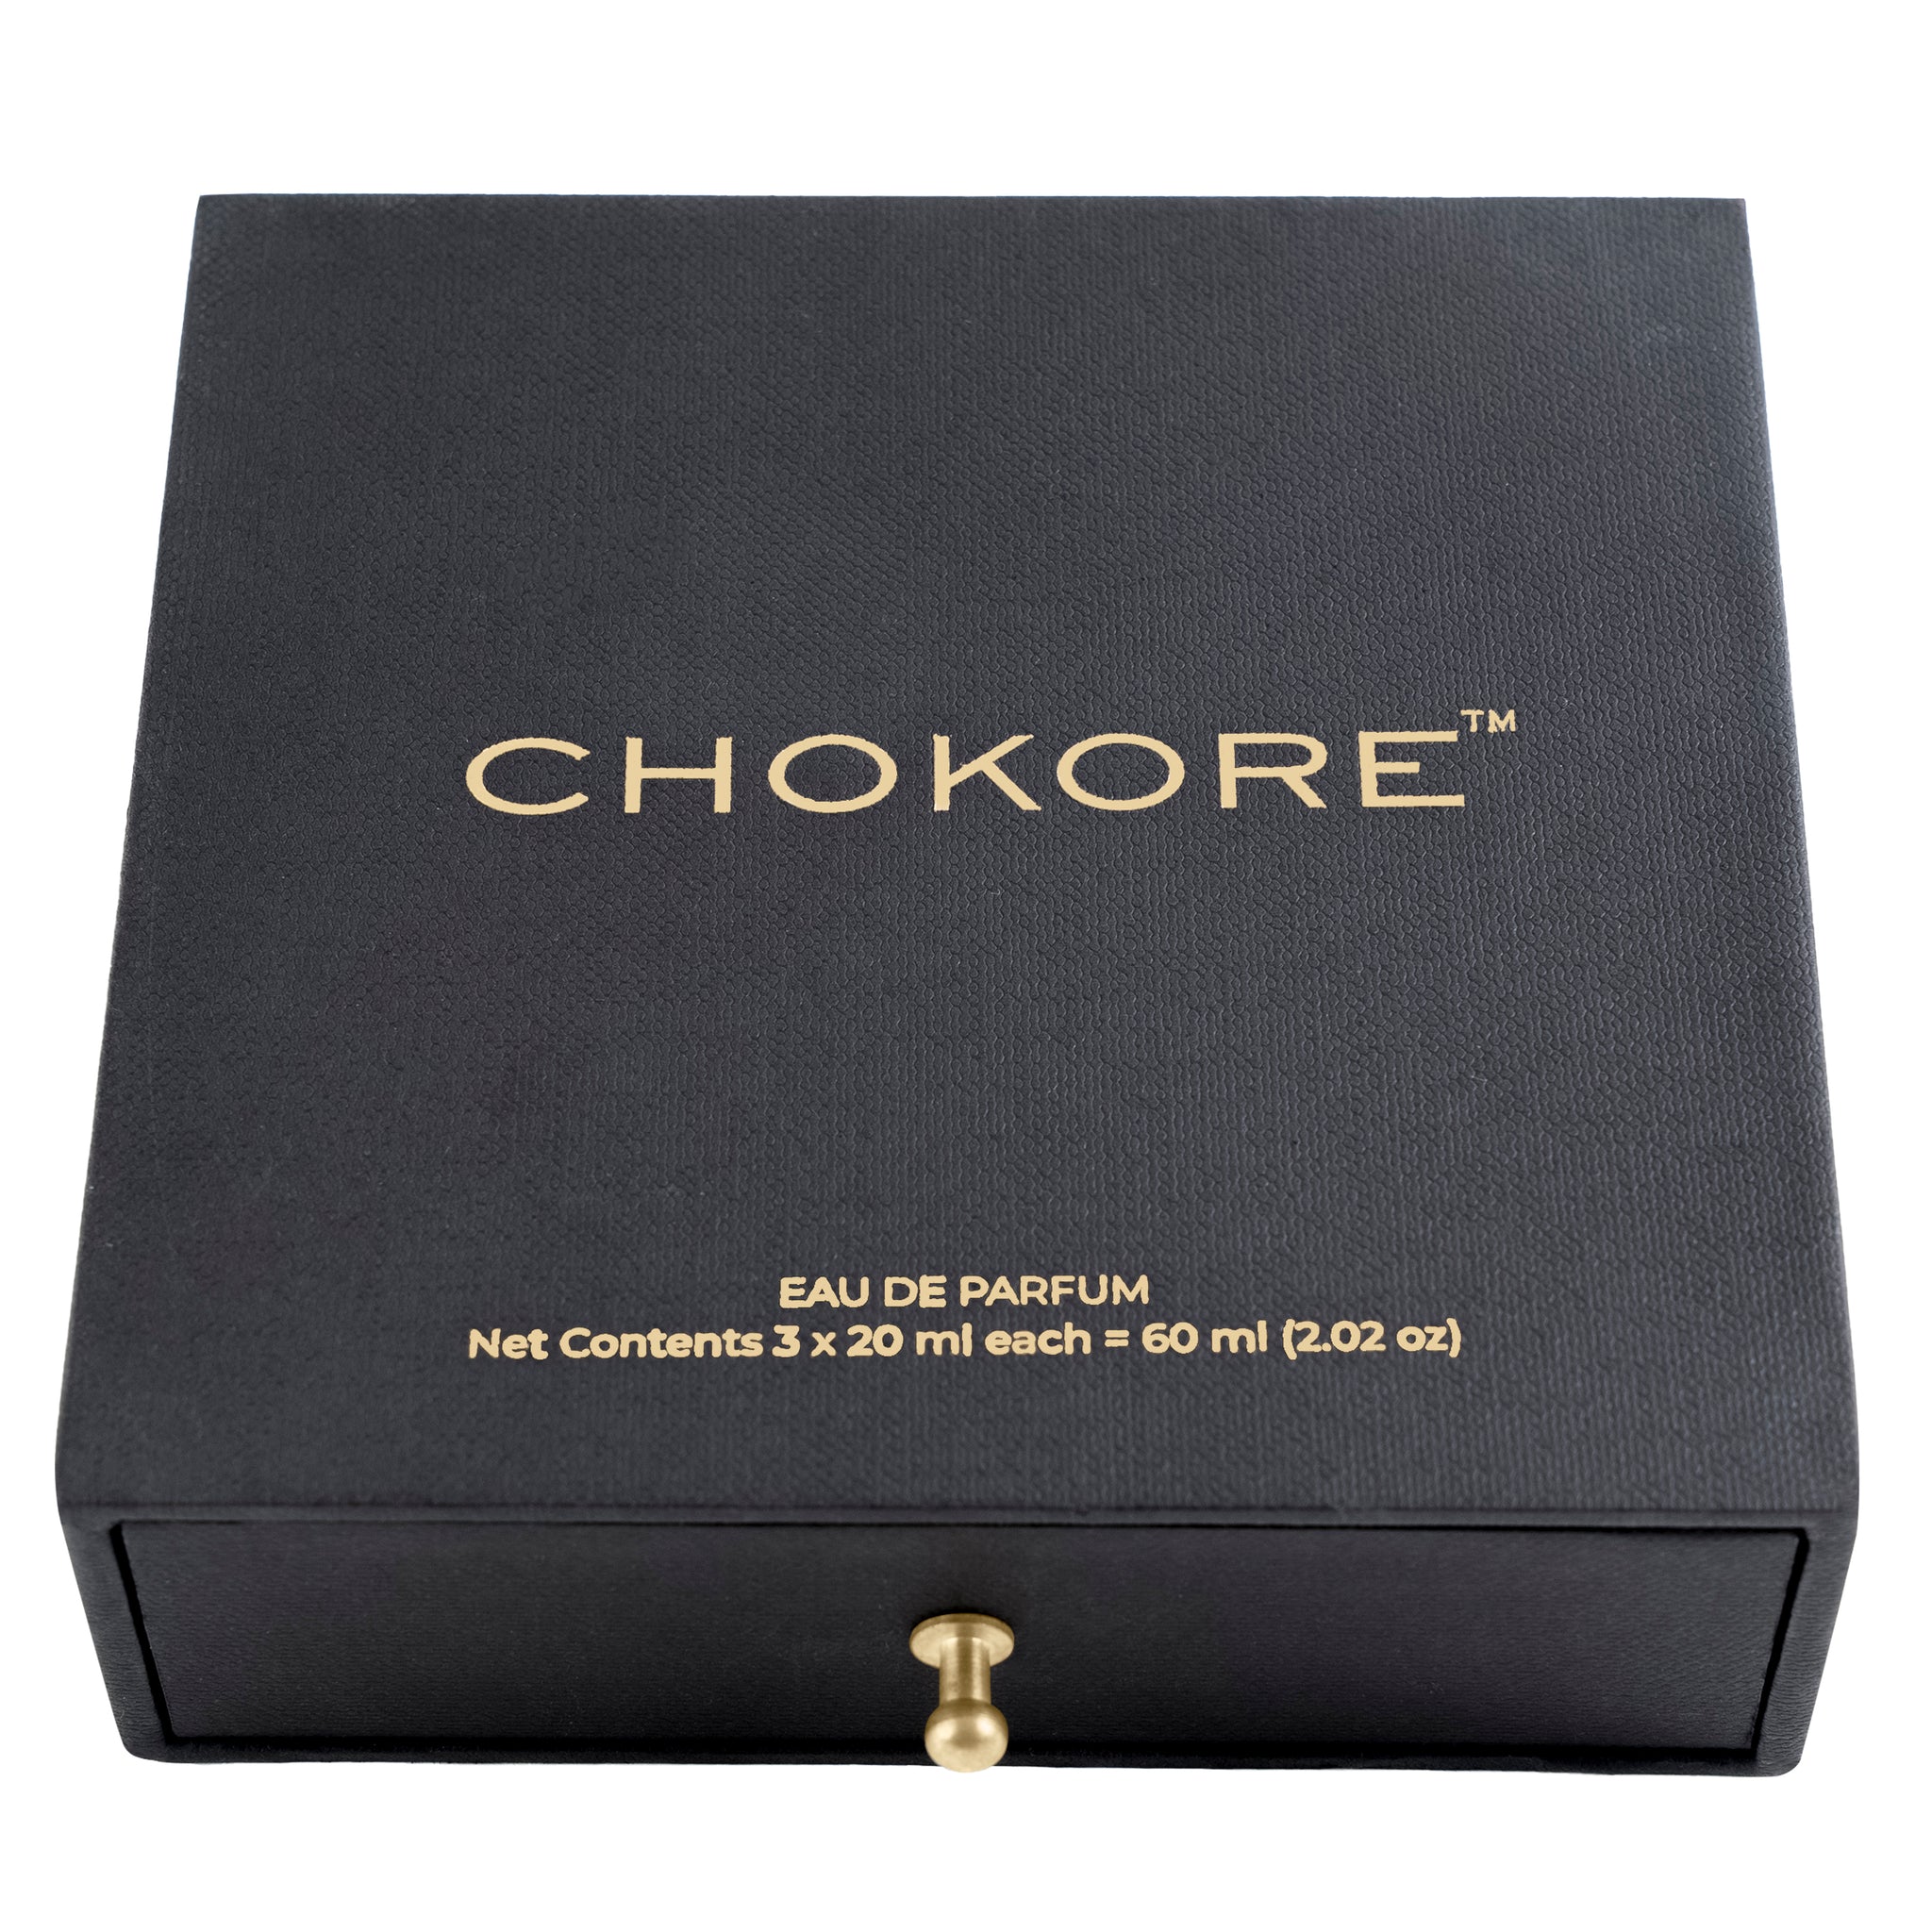 Chokore Perfume Combo Pack of 3 Only For Women (Elixir, Scandalous, & Date Night) | 3 x 20 ml